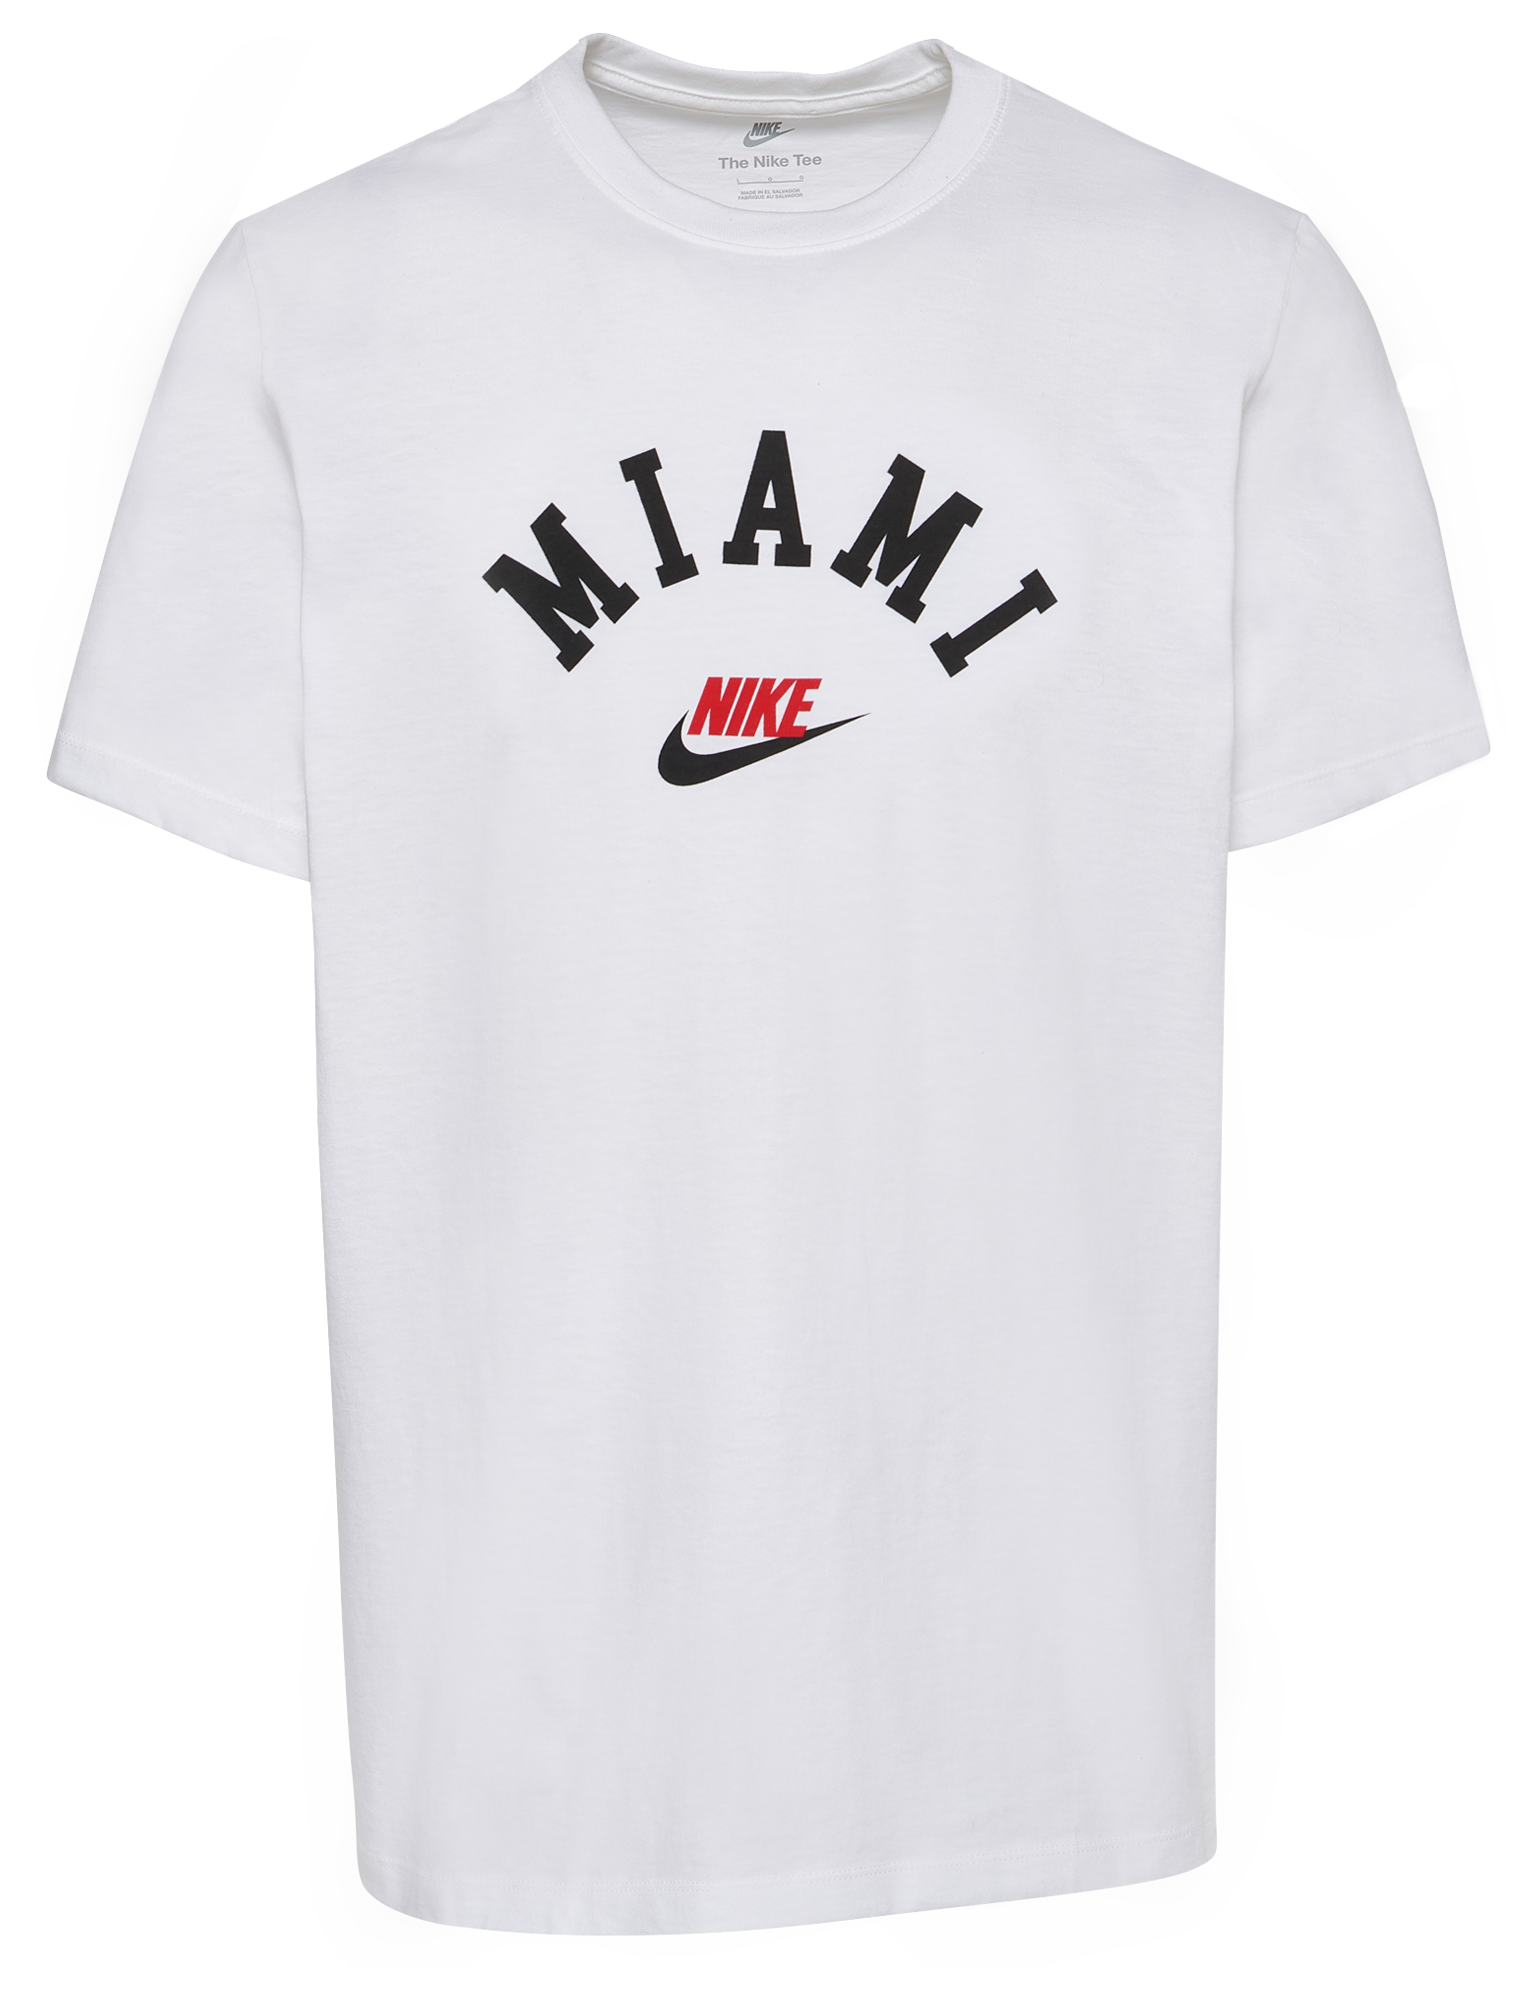 Nike Miami Arch T-Shirt | Champs Sports